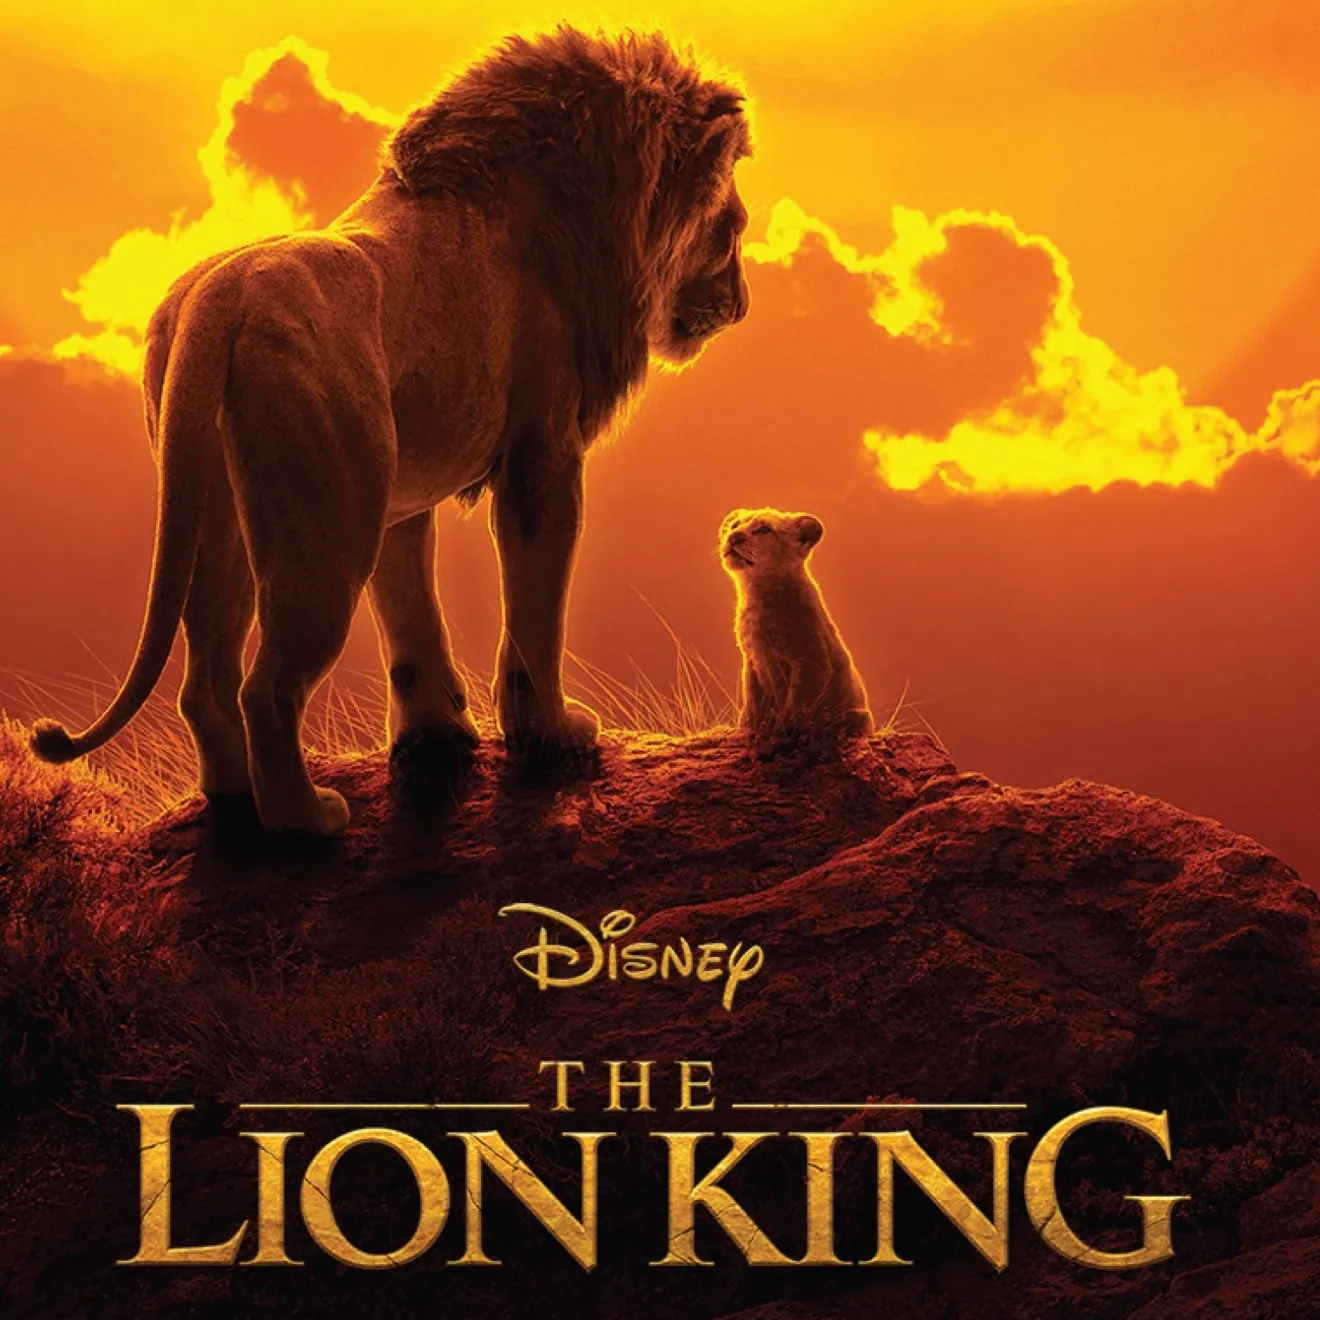 the lion king soundtrack